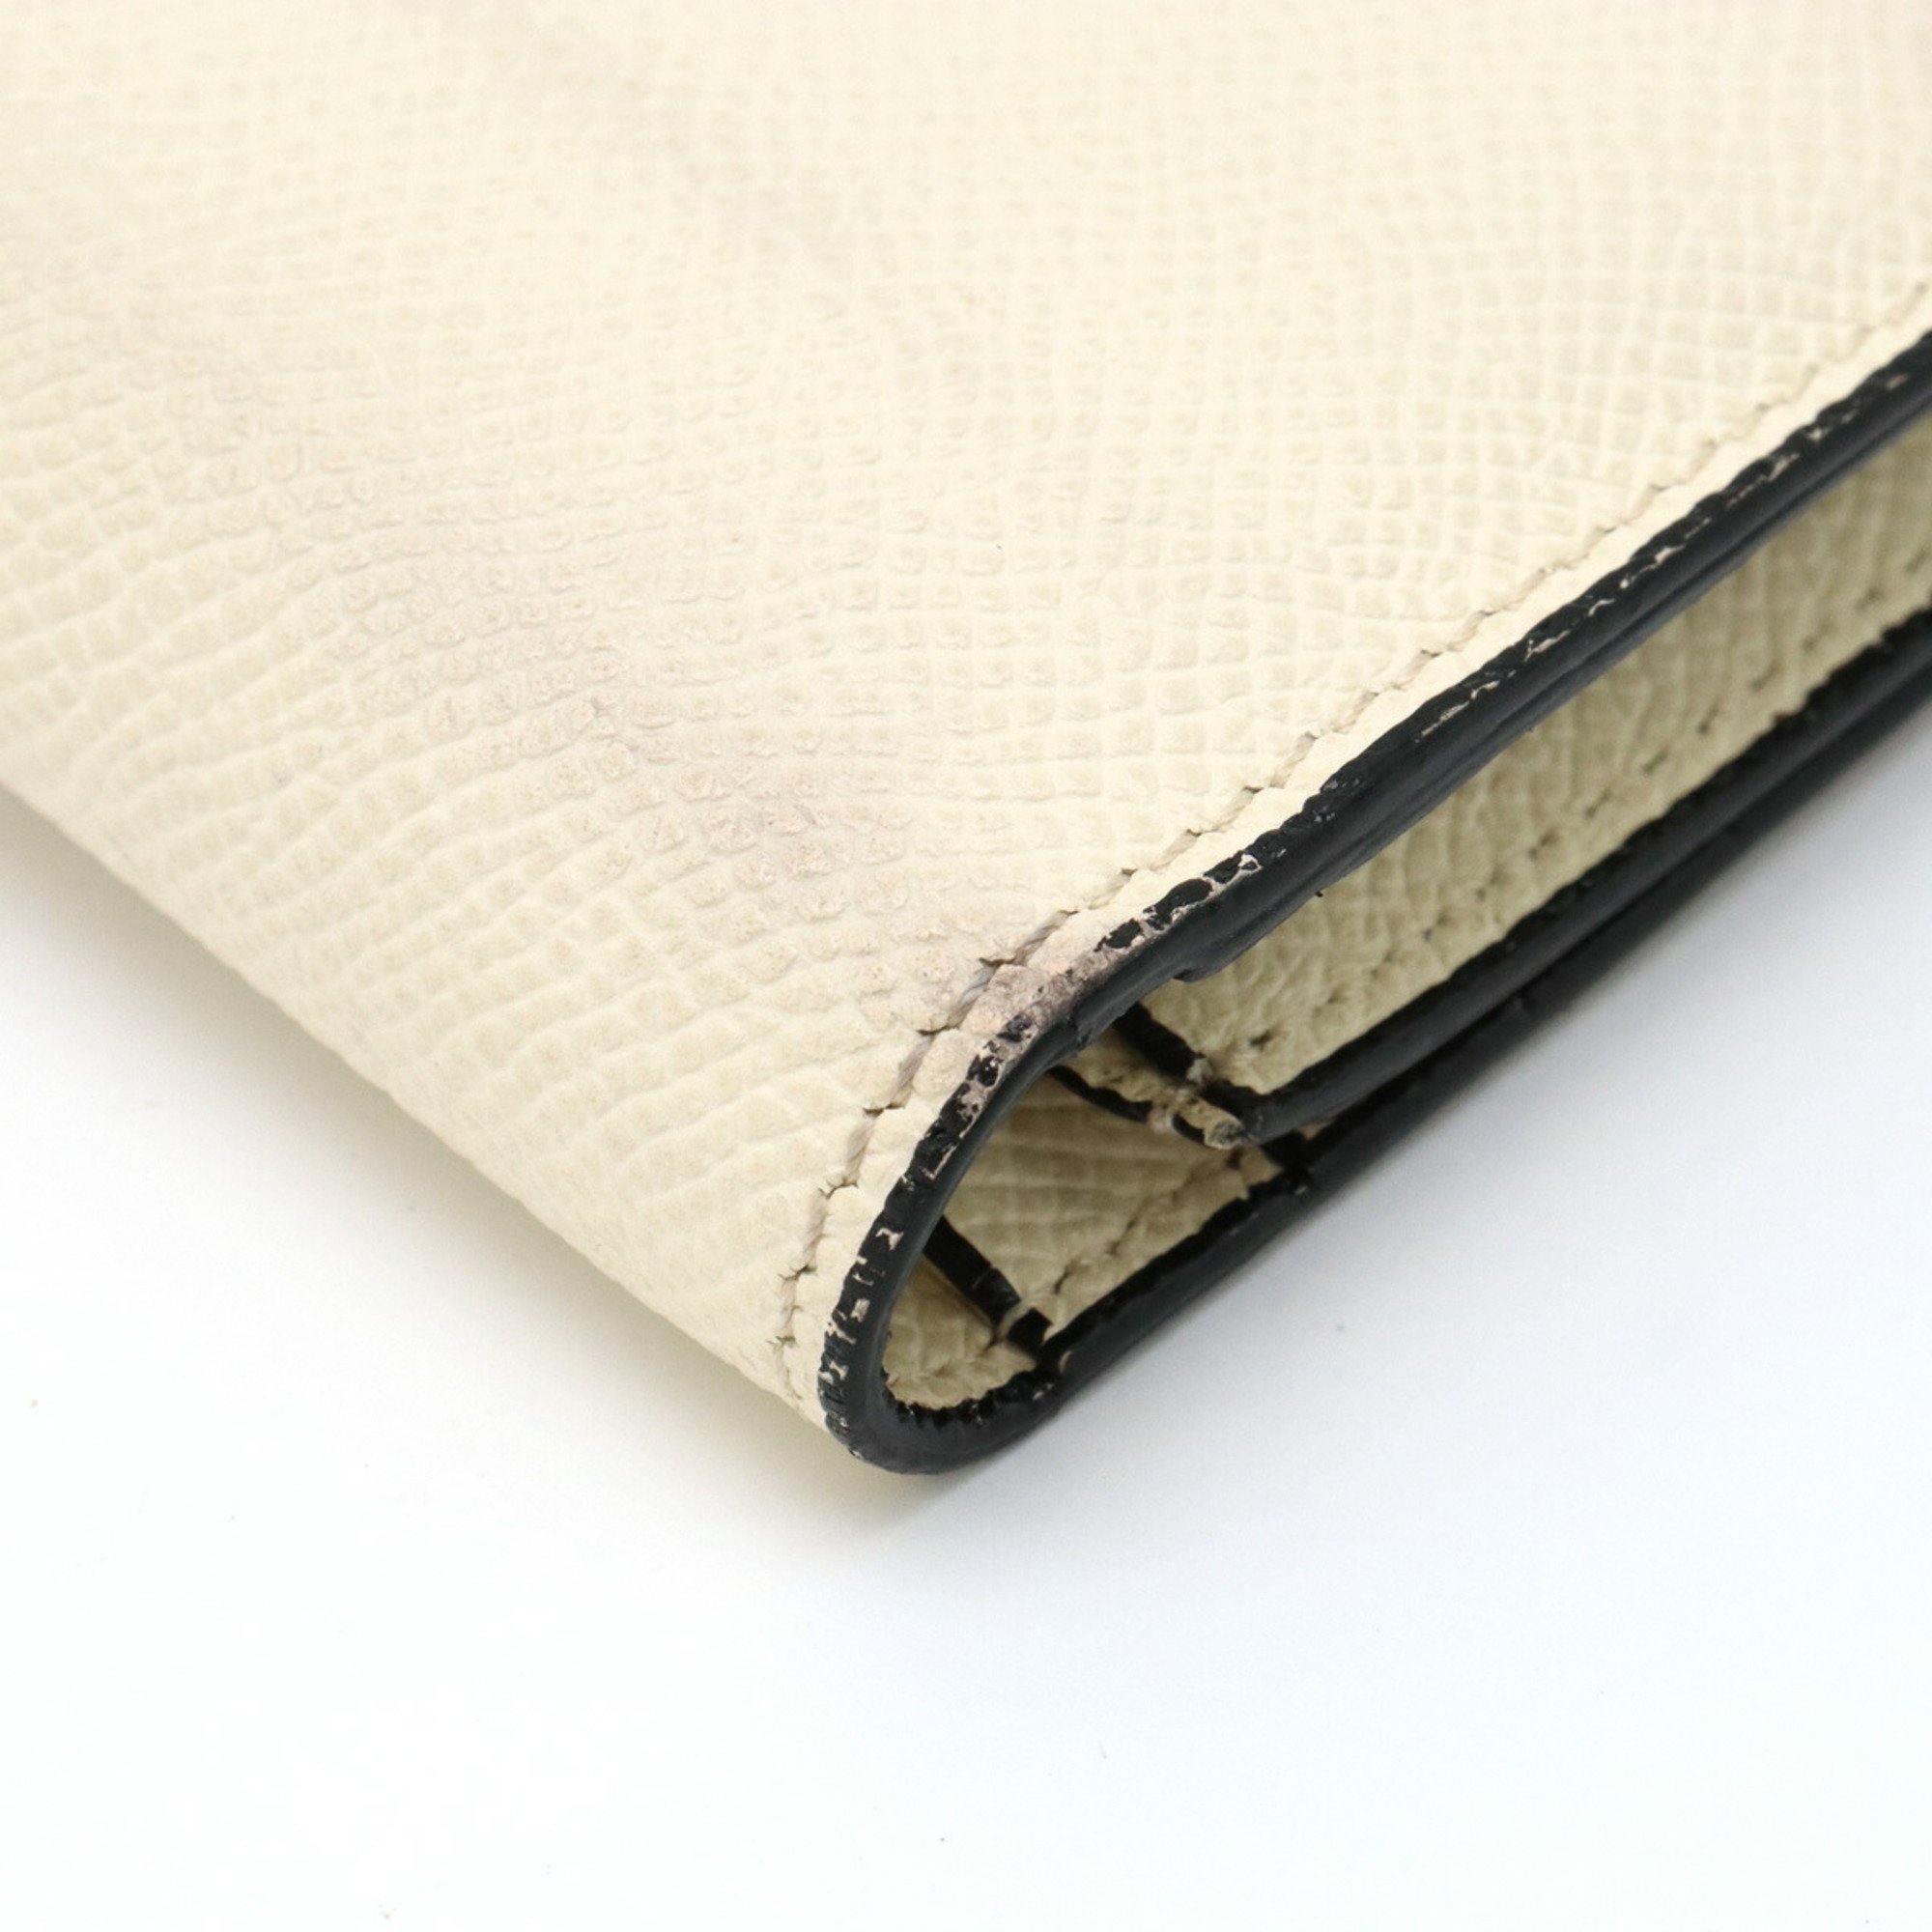 valextra Valextra Bi-fold Long Wallet Leather Cream